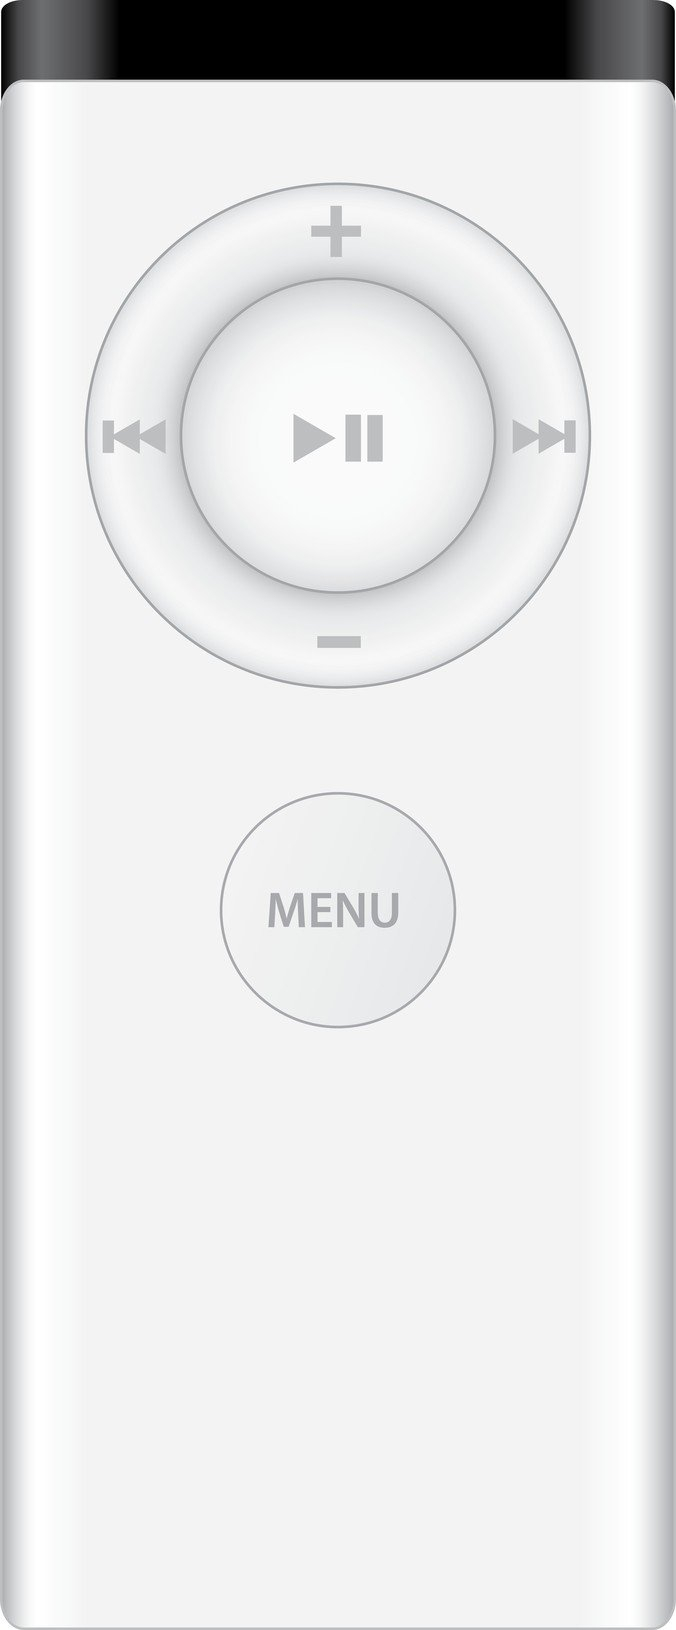 apple,apple remote,imac,ipad,iphone,ipod,mac,macbook,remote,white,com365psd